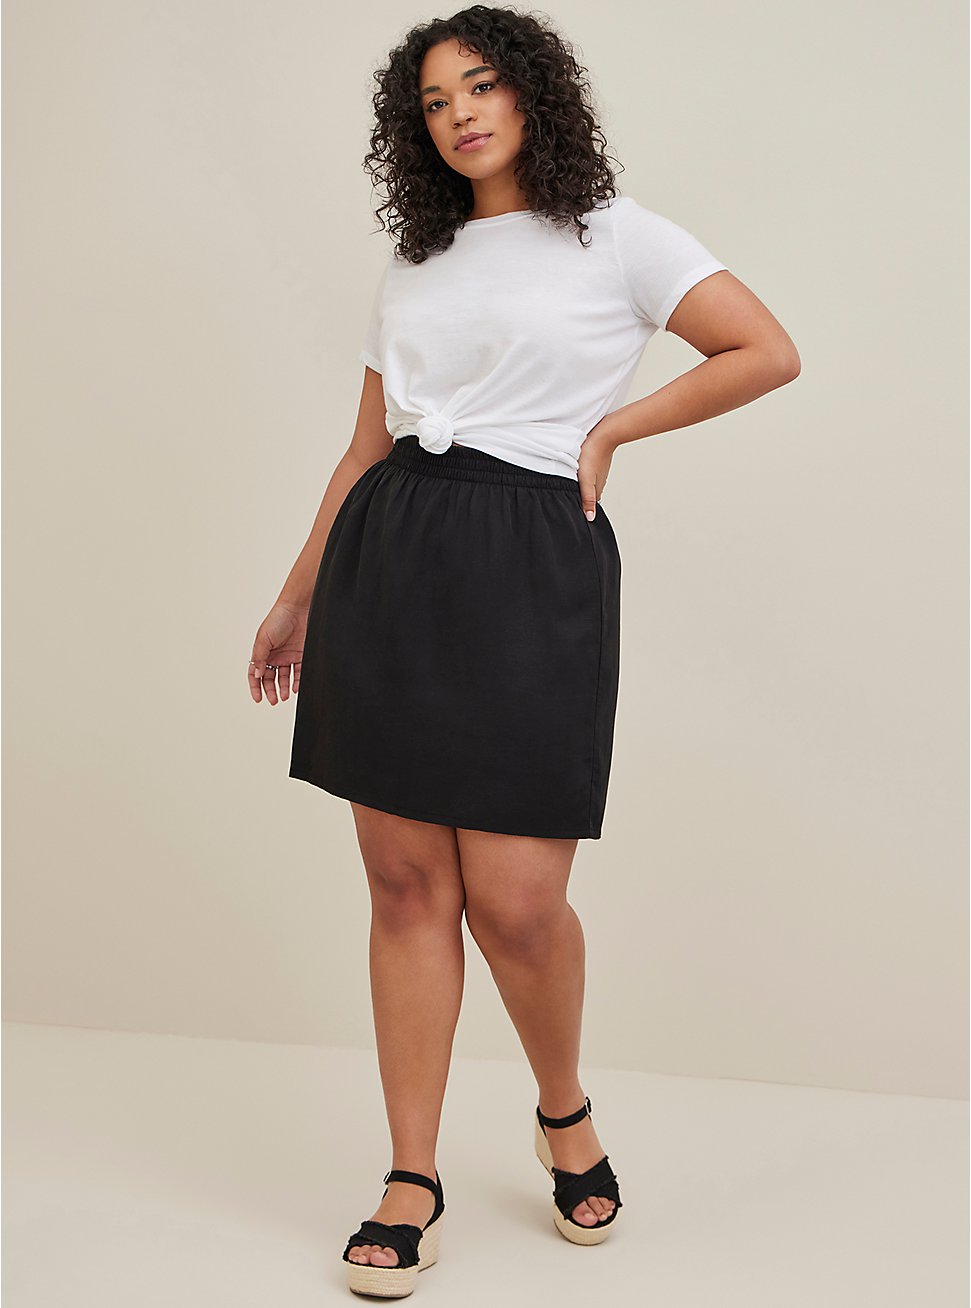 Plus Size High Waist Mini Skirt - Linen Black, DEEP BLACK, hi-res